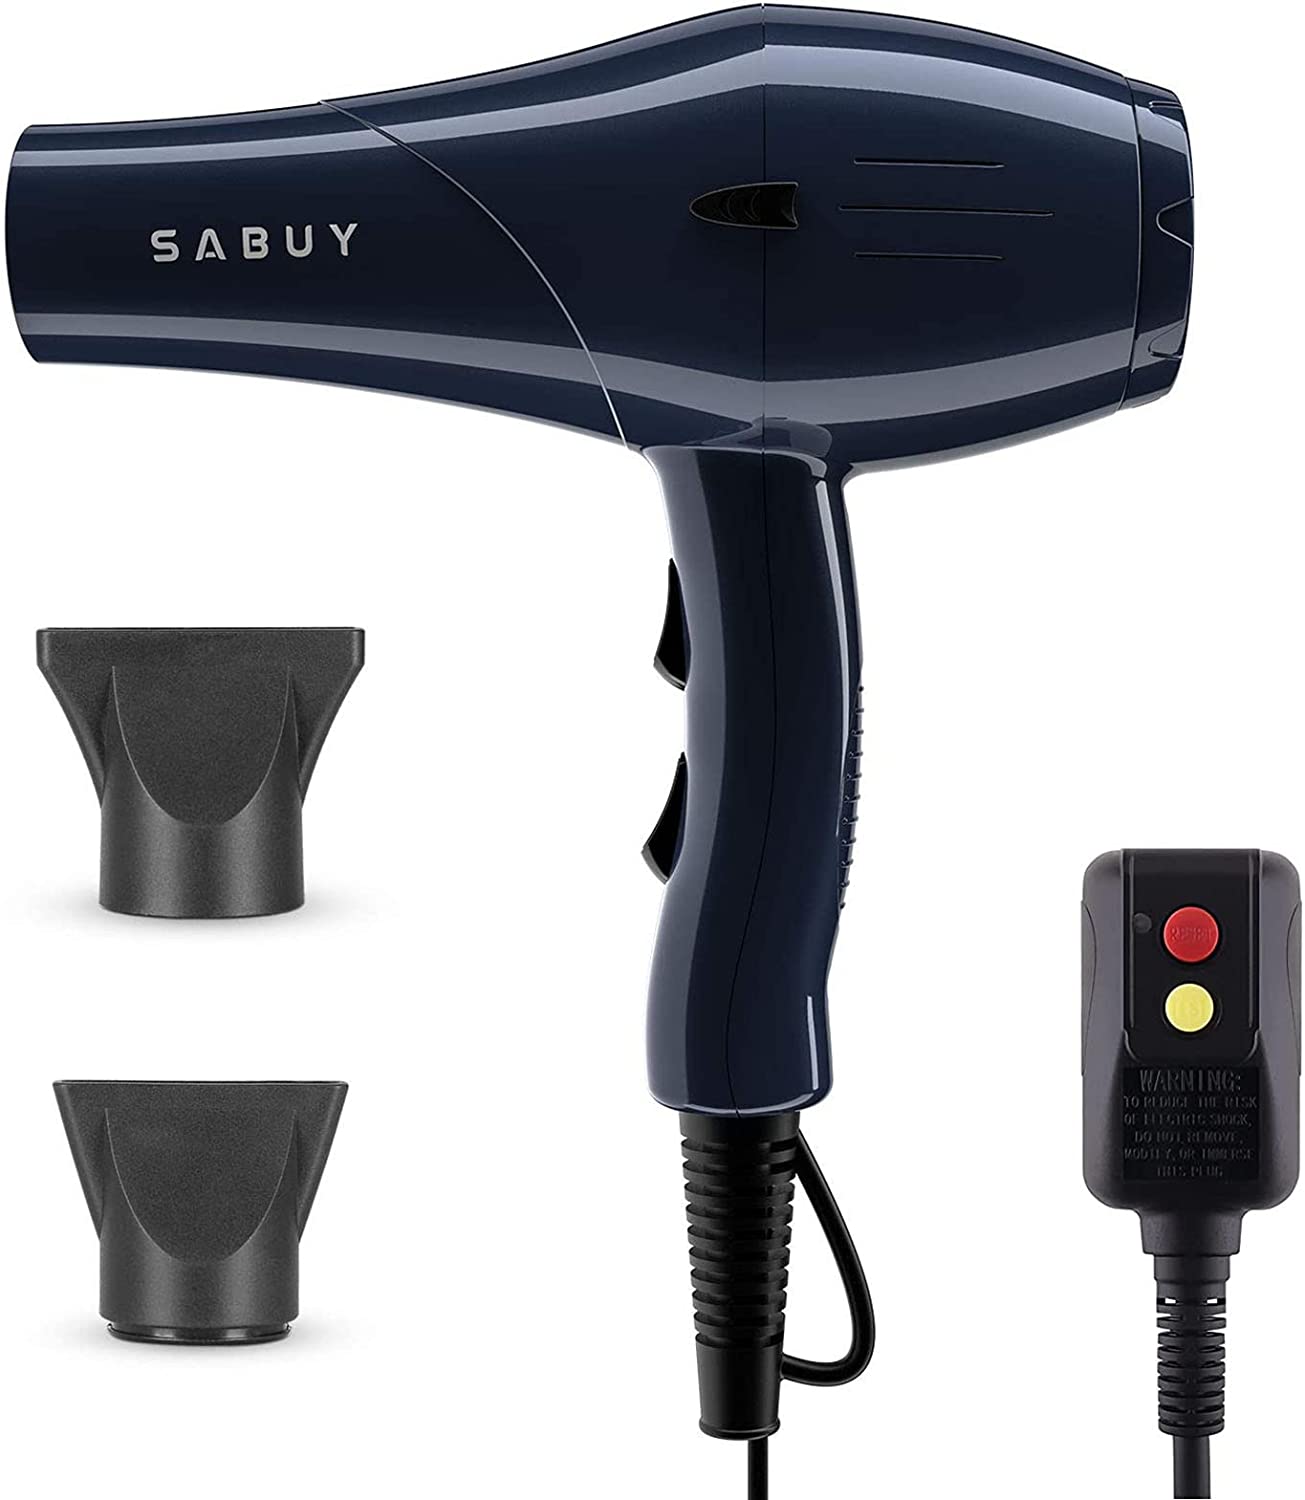 Sabuy Professional Mini Powerful Hair Dryer, 2200-Watt